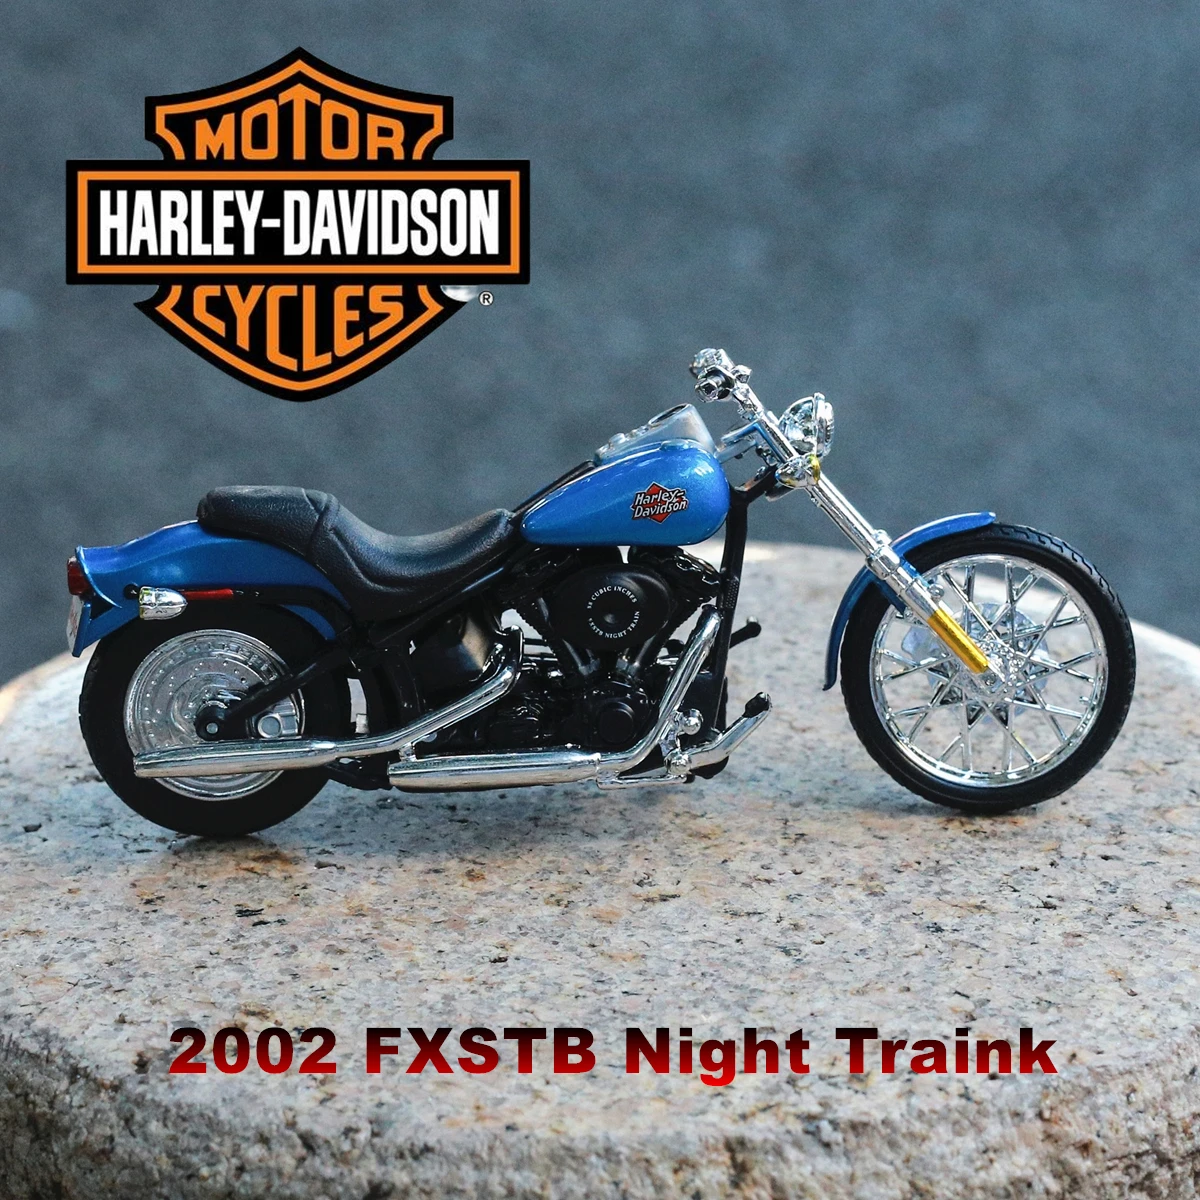 

Maisto 1:18 Harley Davidson 2002 FXSTB Night Traink Motogp Motorcycle Model Souvenir Toy Collectible Mini Moto Die Cast